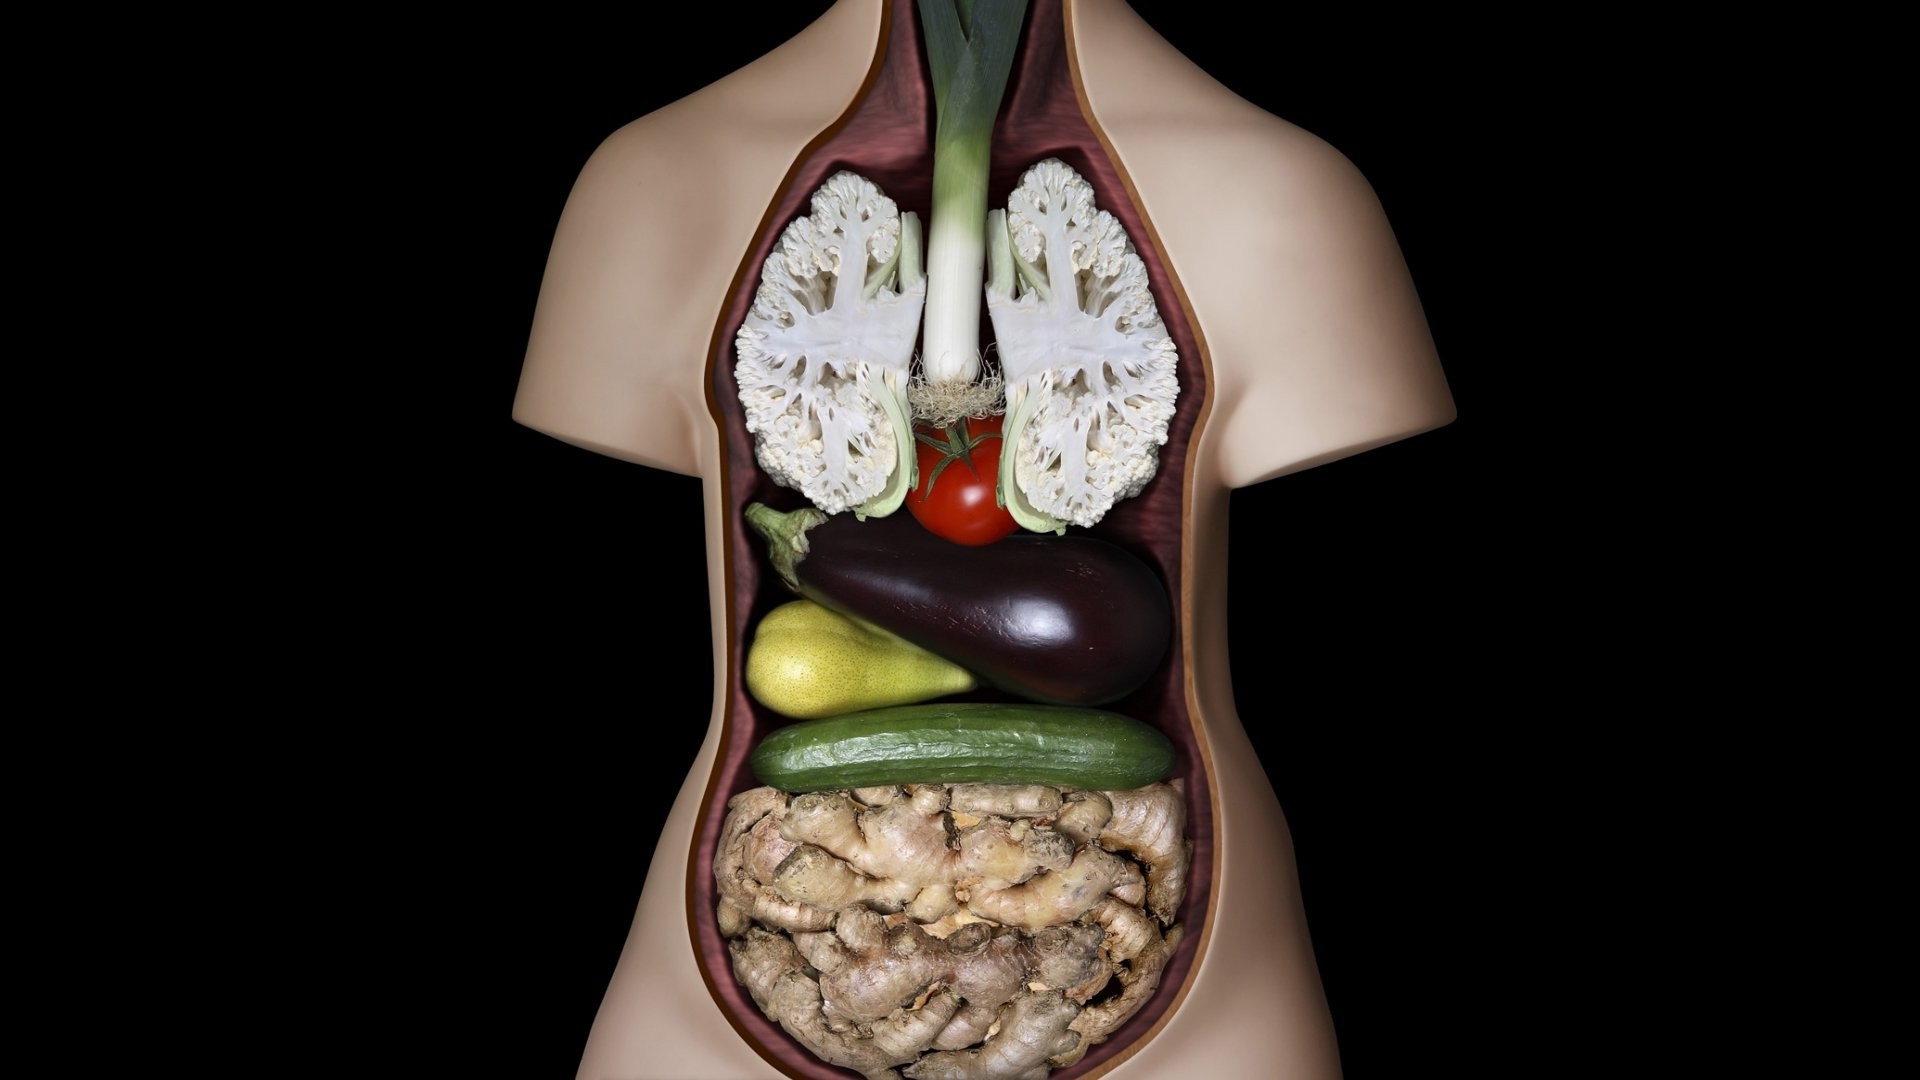 figurines, Vegetables, Guts, Humor, Anatomy Wallpaper